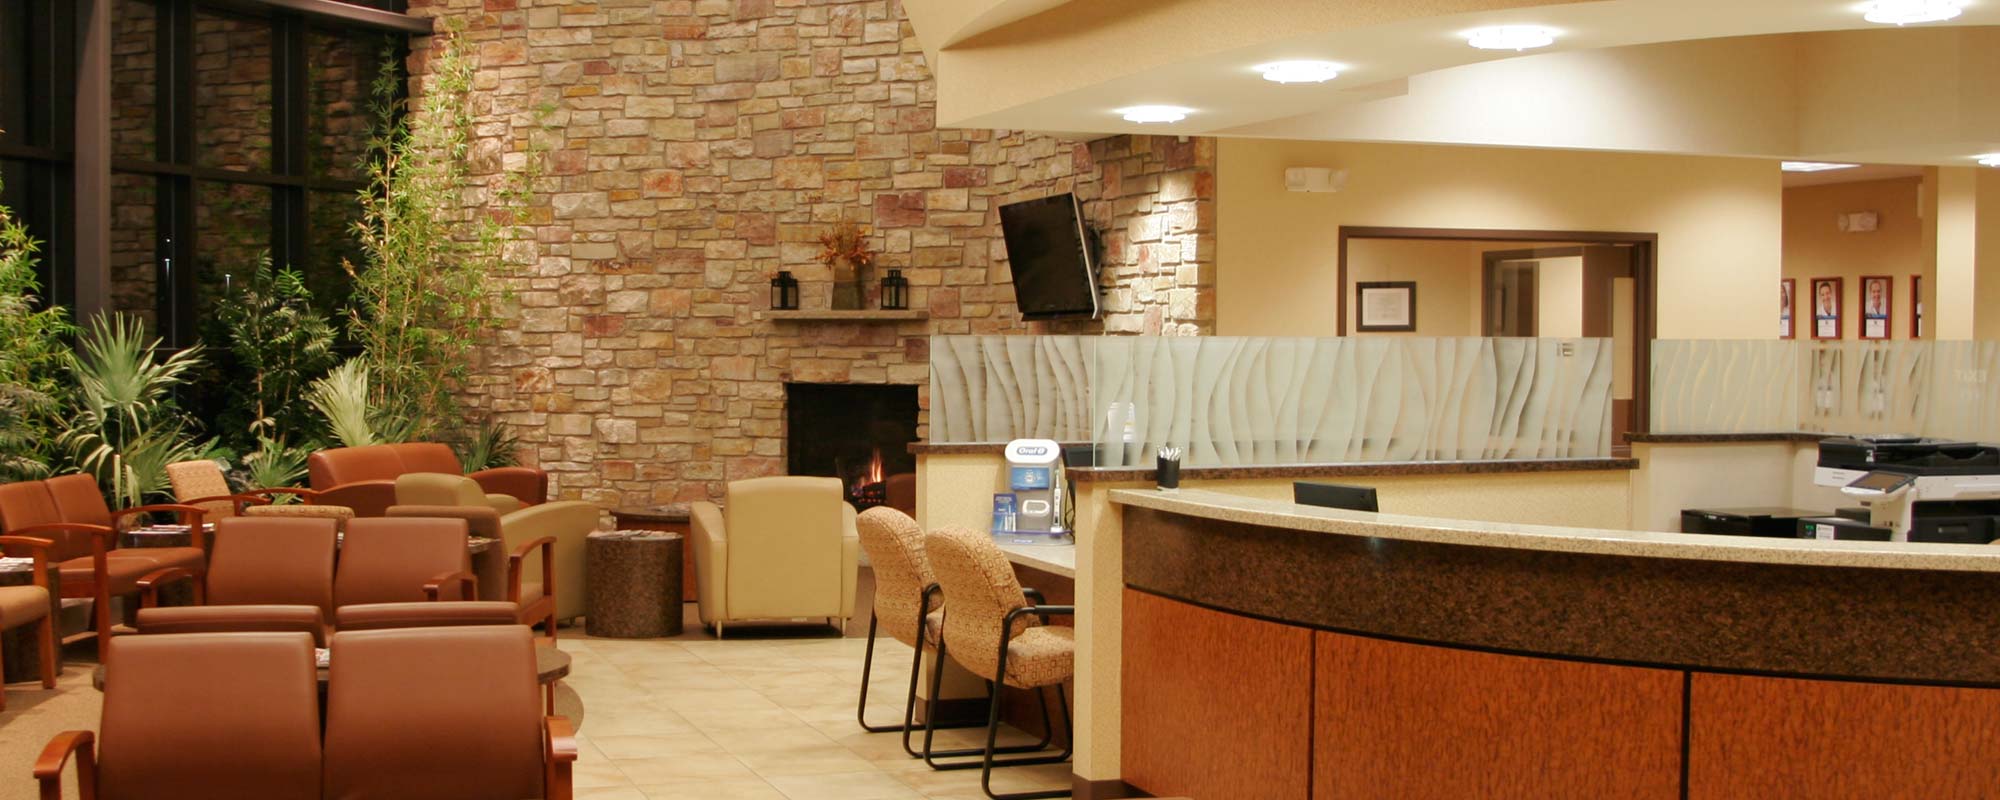 The lobby of Dental Associates Appleton North clinic.